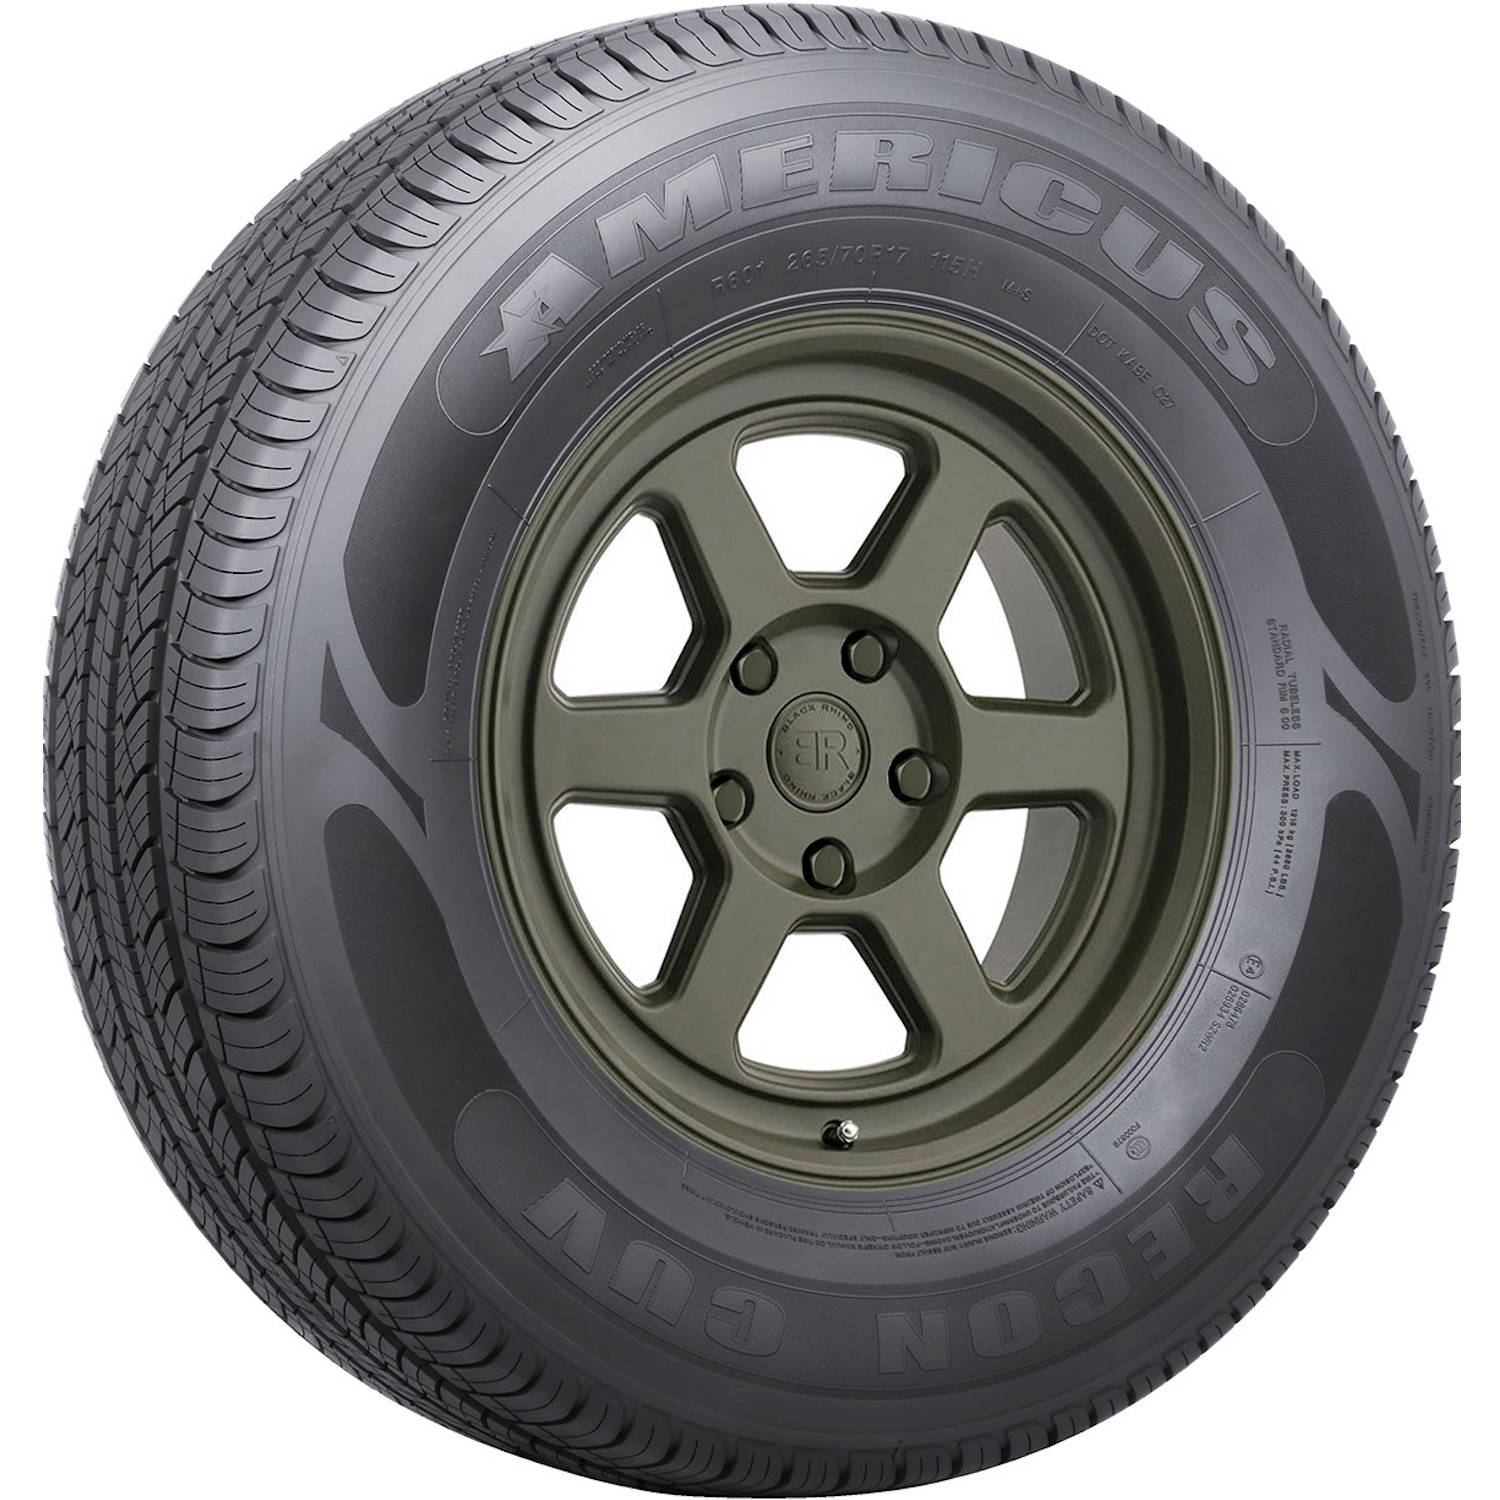 AMERICUS RECON CUV 235/55R18 XL (28.2X9.3R 18) Tires